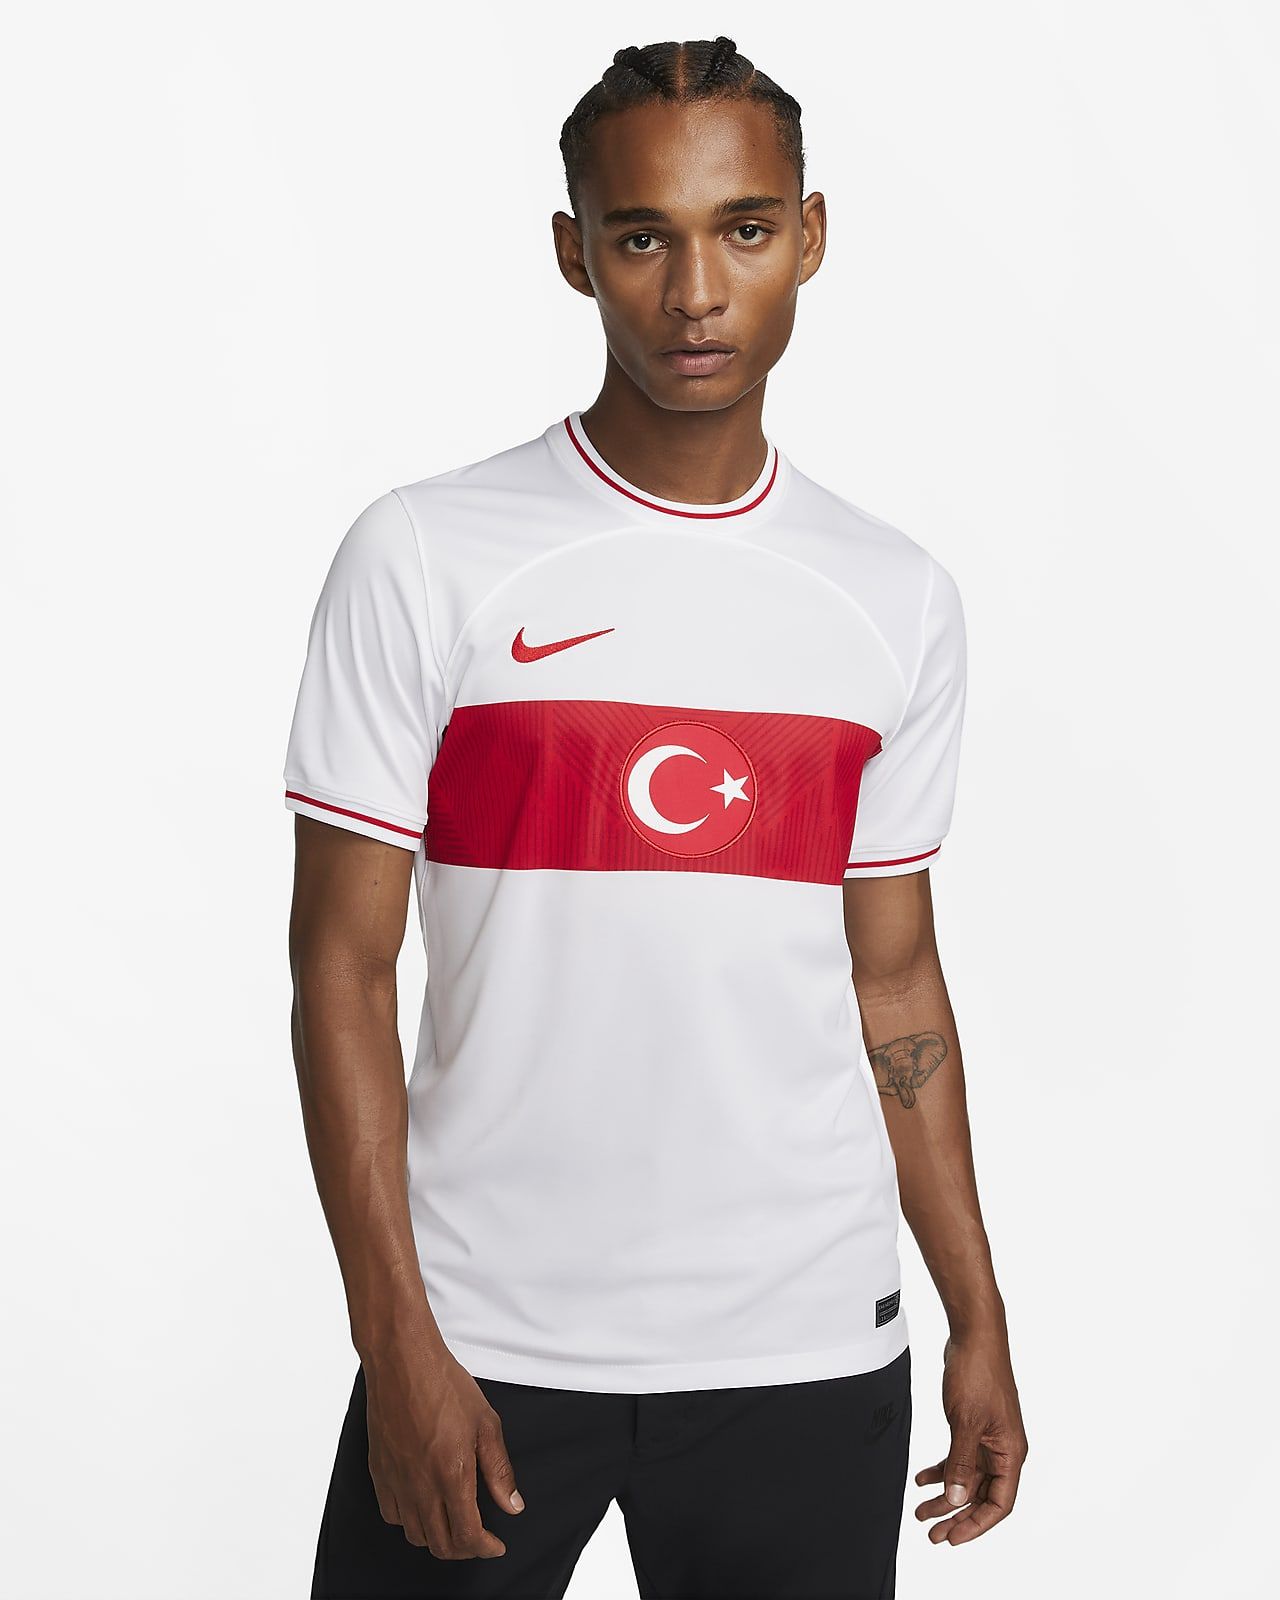 Найк турция сайт. Nike в Турции. Nike Turkey. Найк Турция.